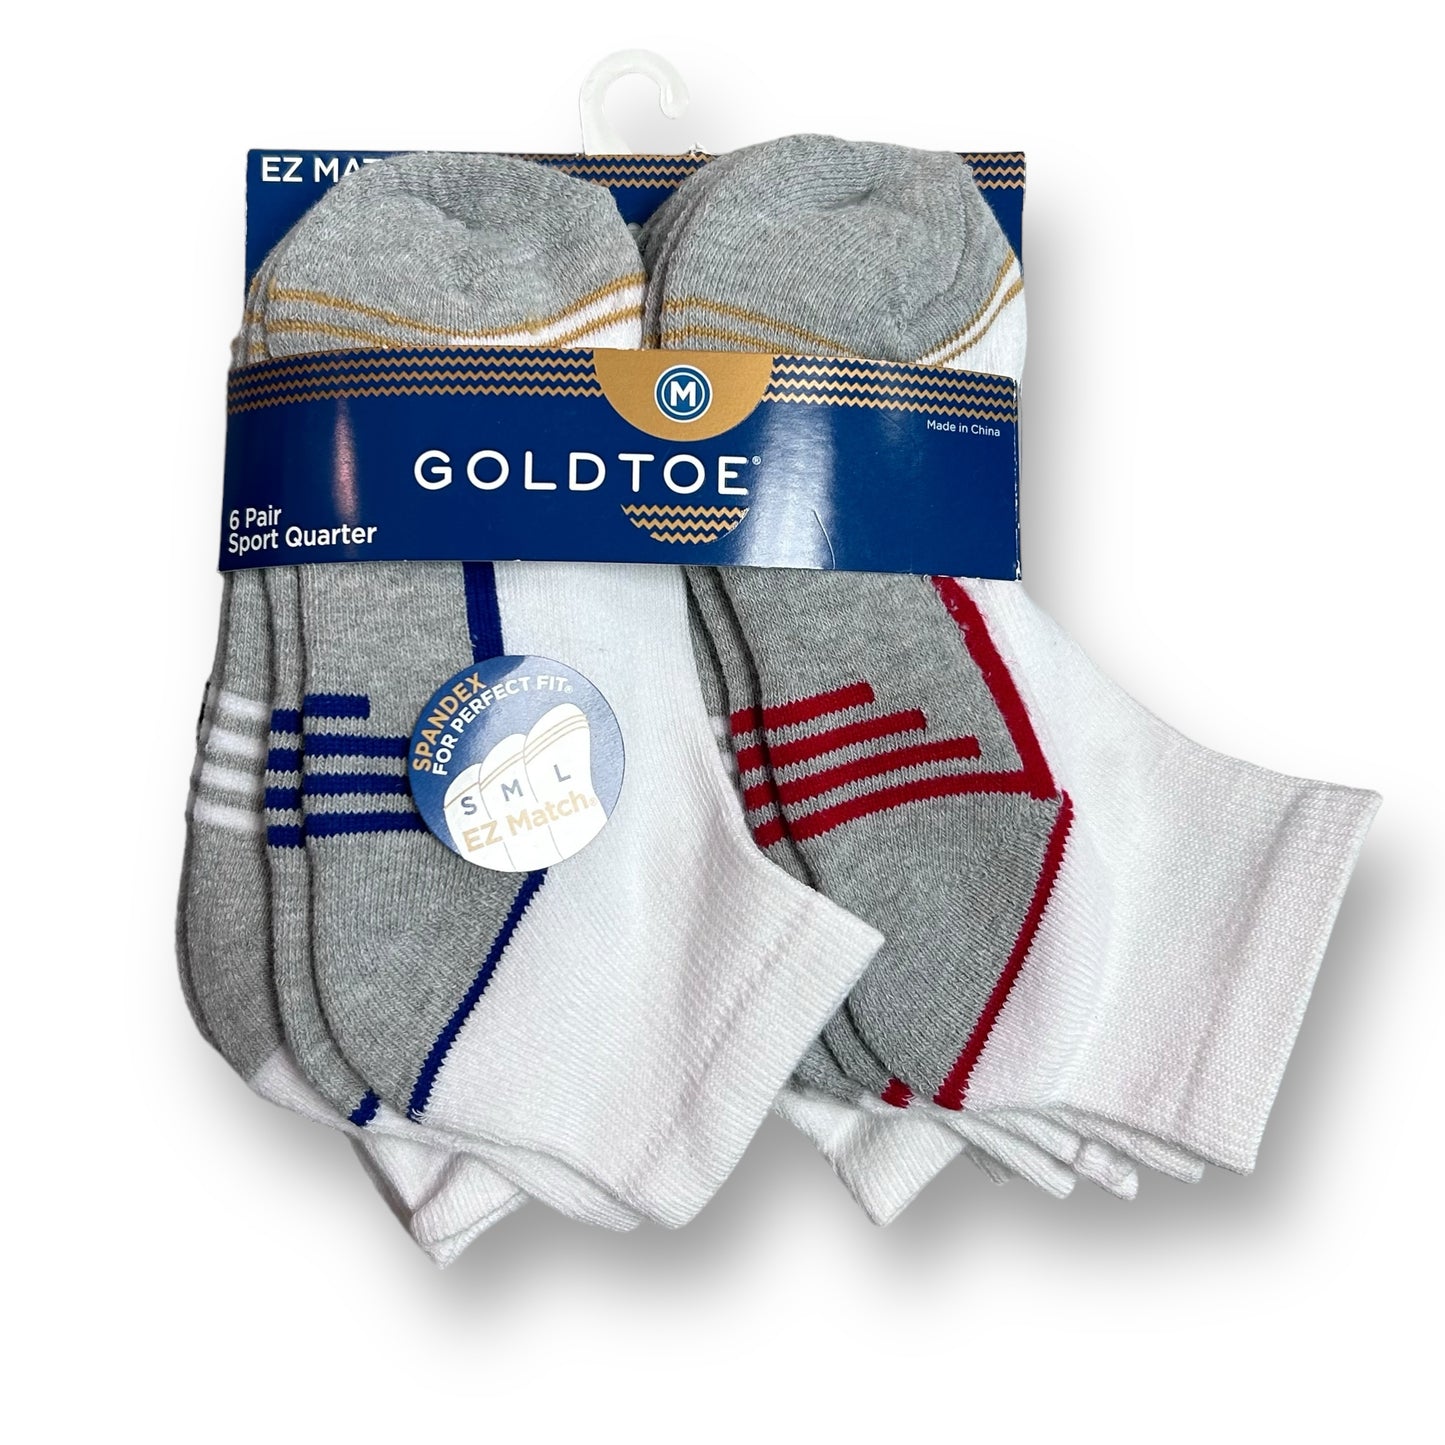 NEW! Boys Goldtoe Size 9K to 2.5Y Crewcut Socks, 6-Pair